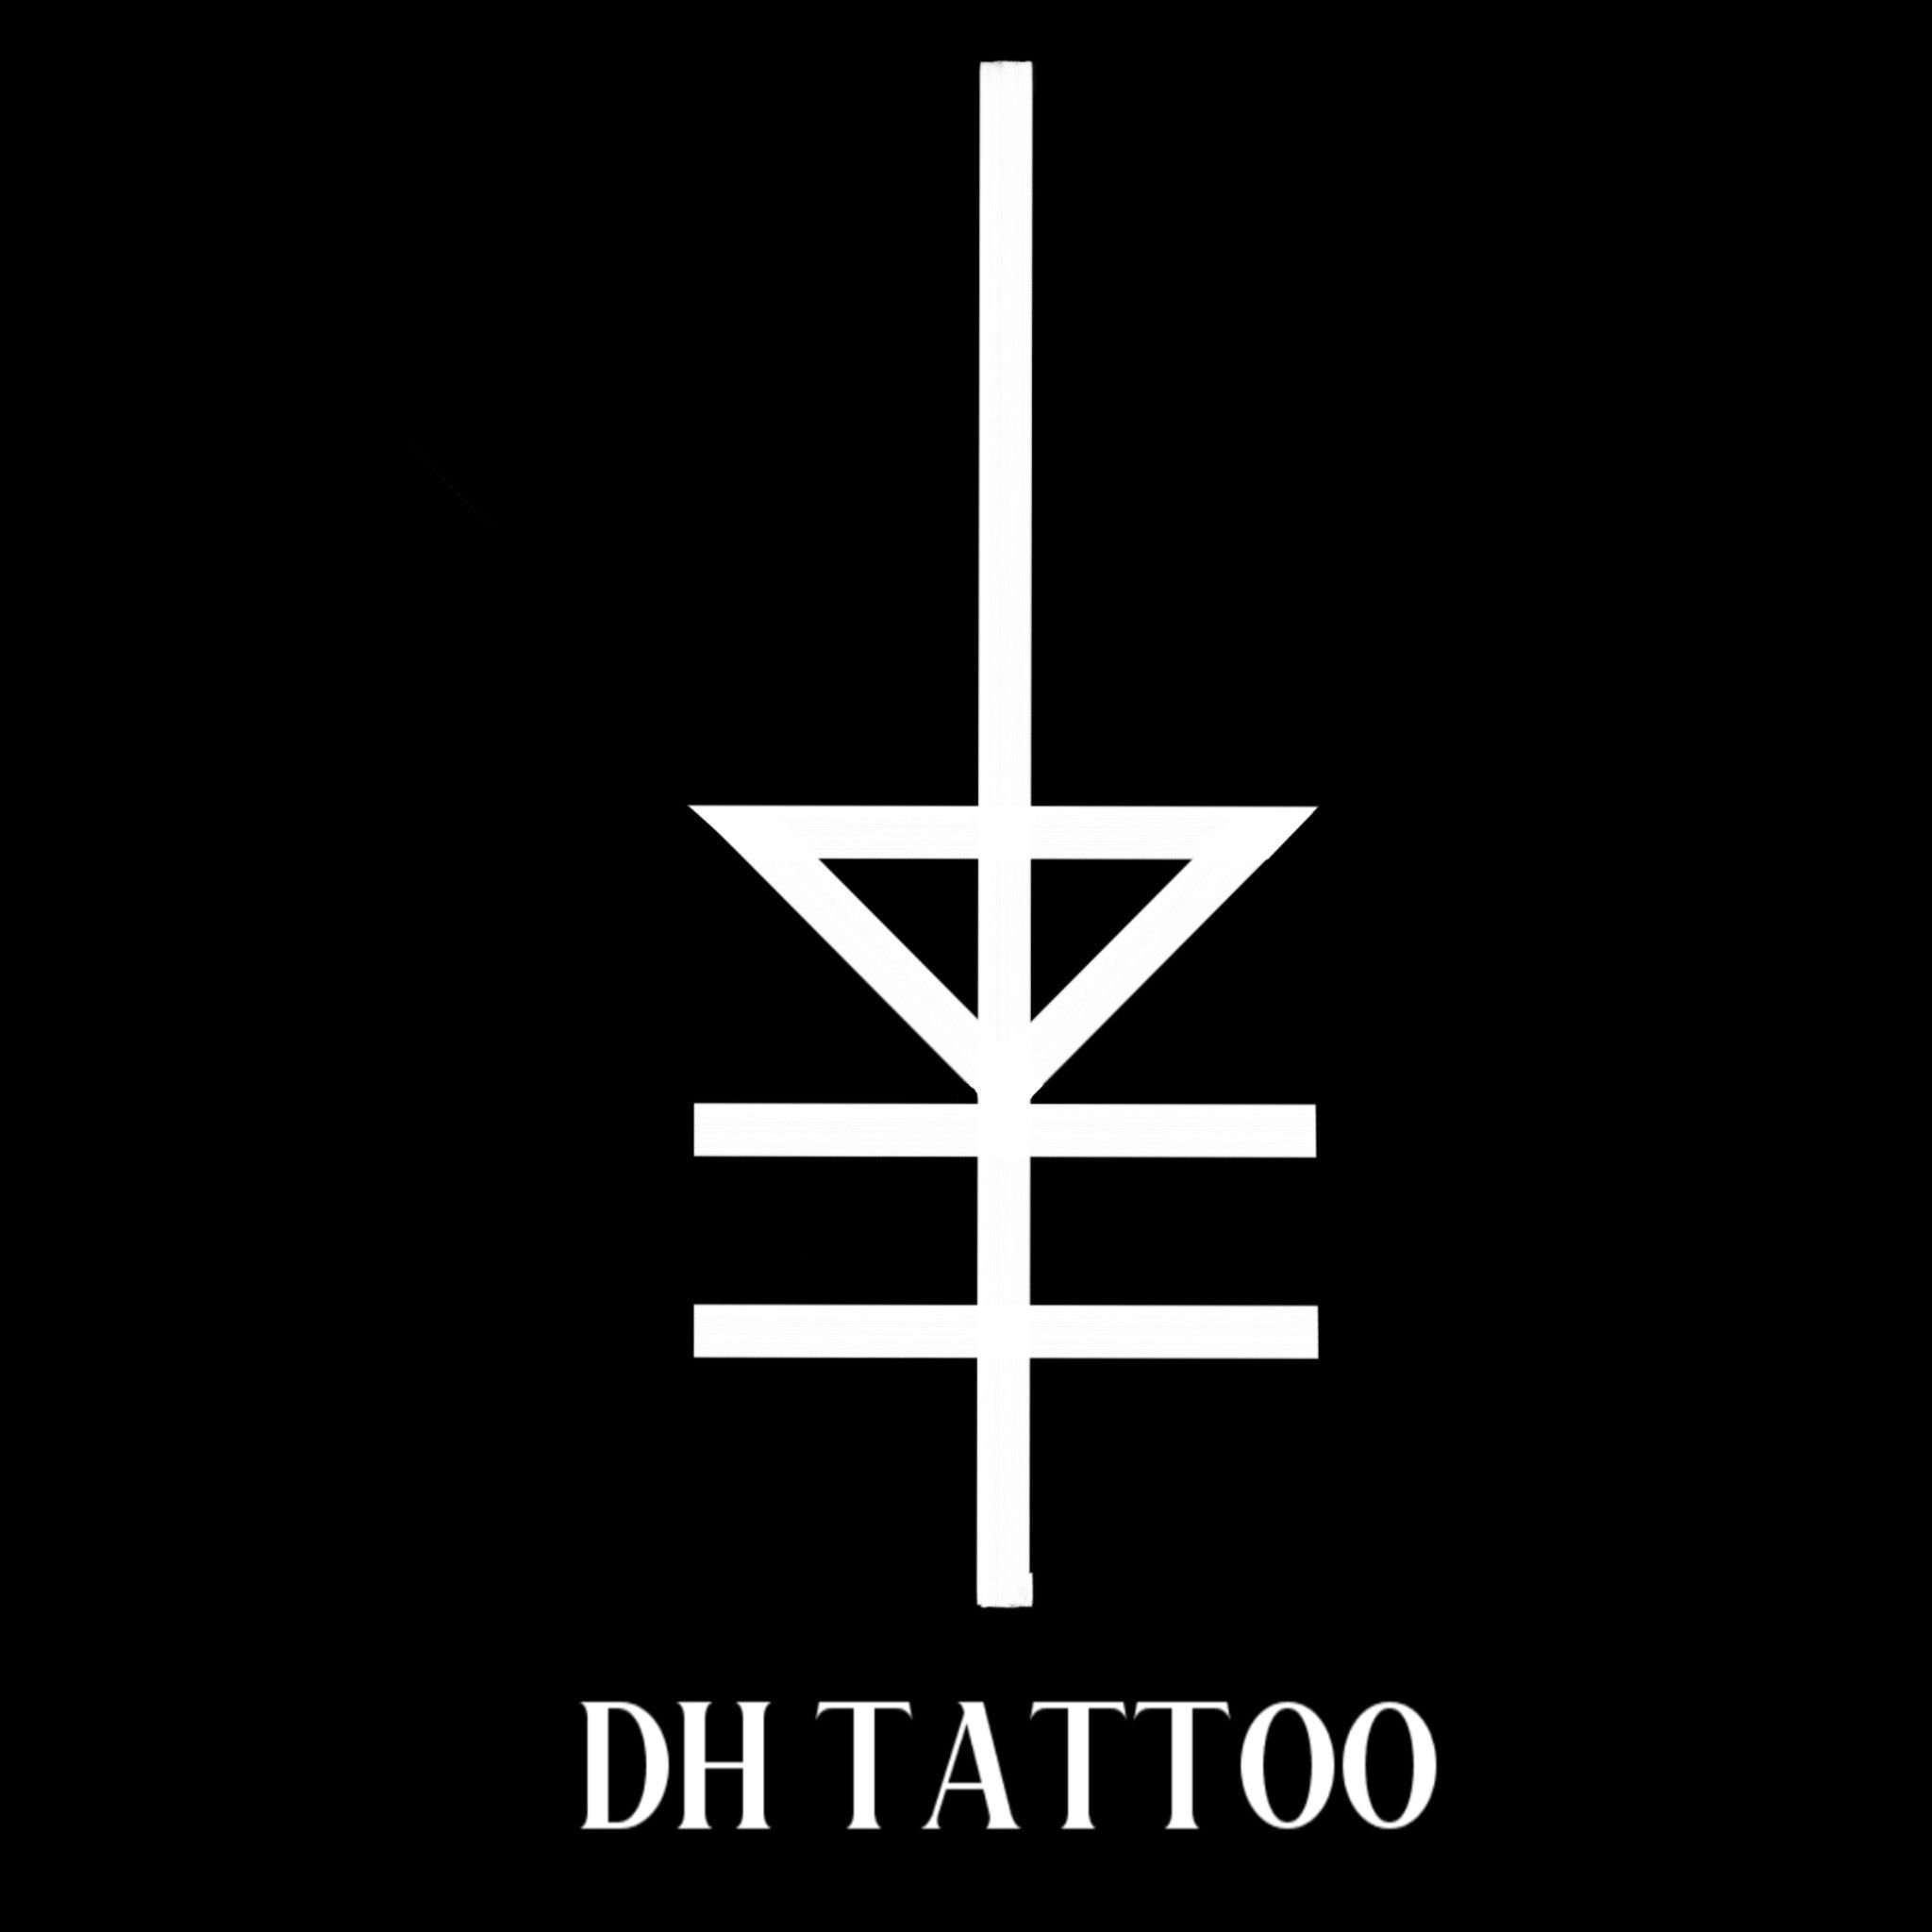 DH Tattoo, 129 S Main St,, Mt Holly, 28120